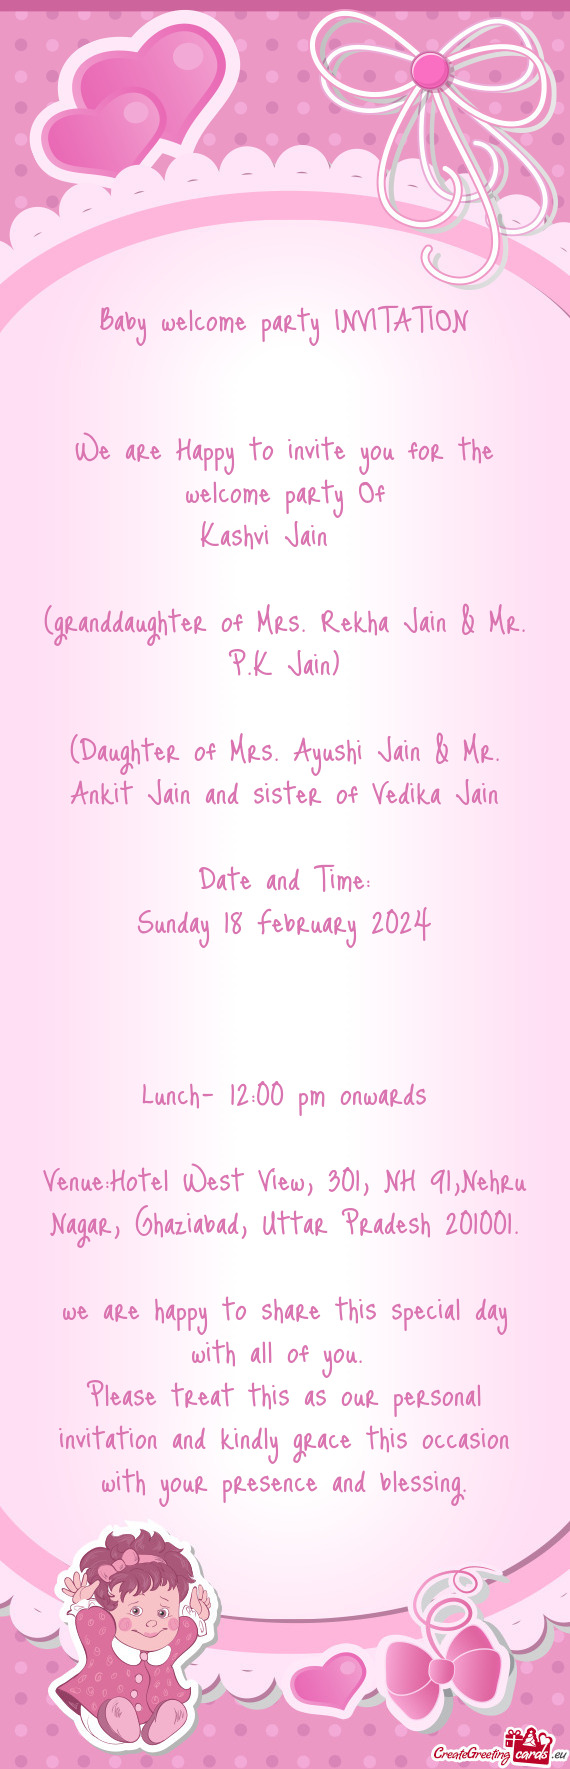 (Daughter of Mrs. Ayushi Jain & Mr. Ankit Jain and sister of Vedika Jain